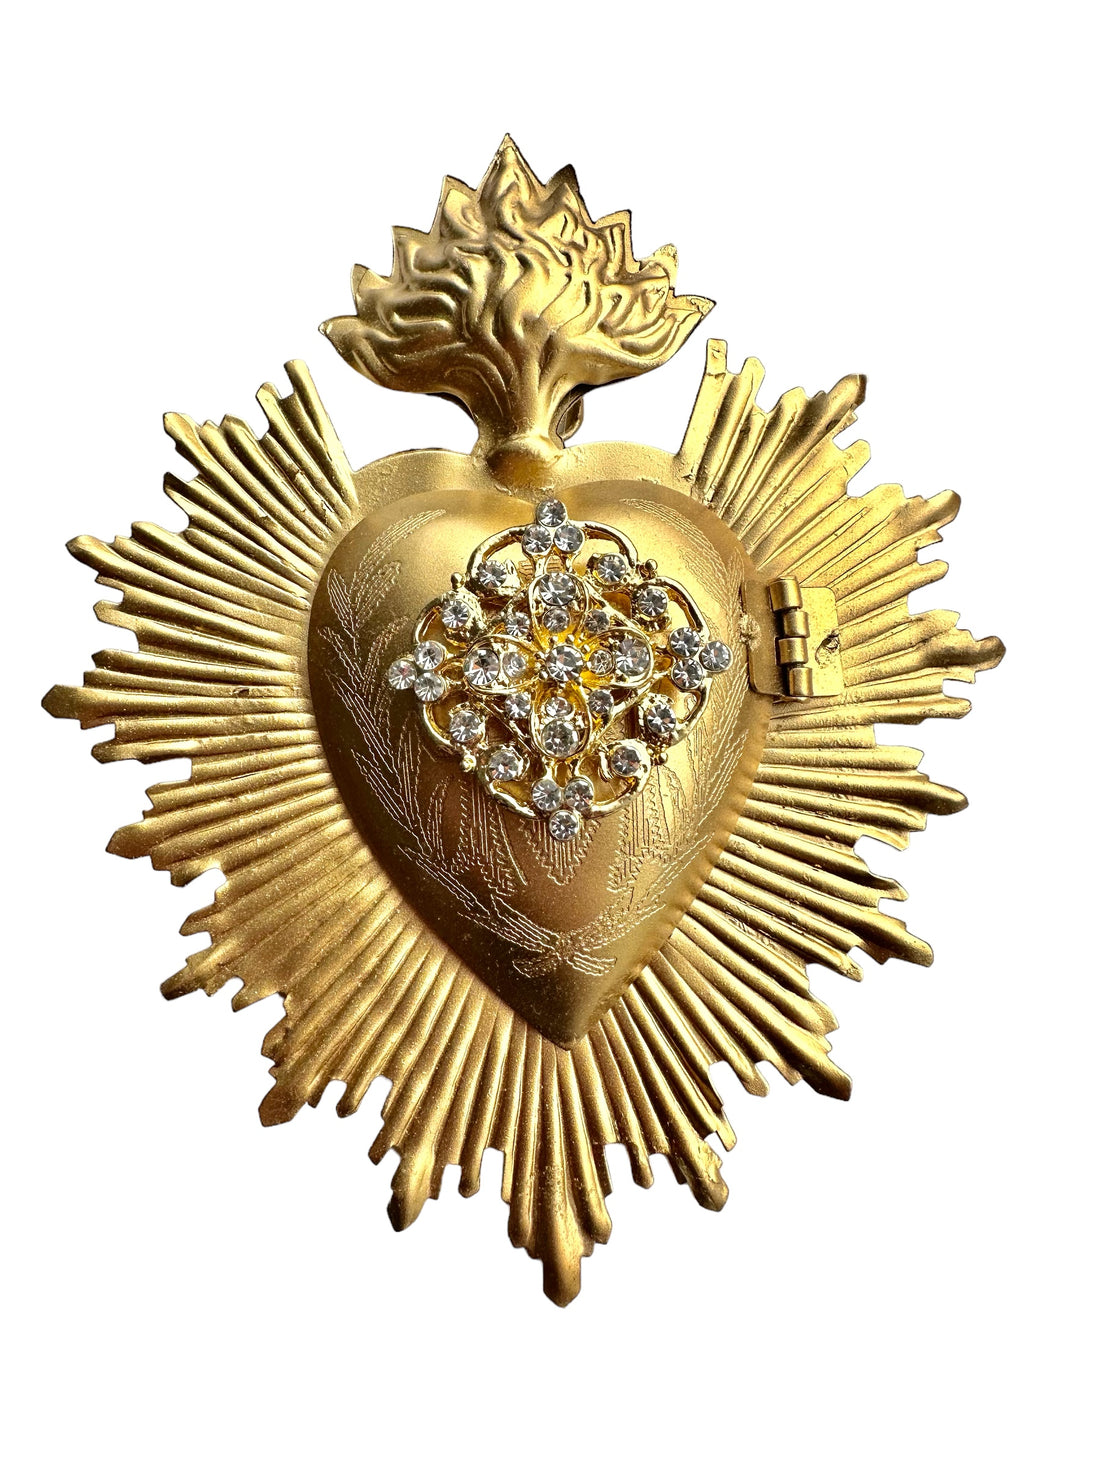 Sacred Heart, Catholic gifts, christian gifts, embellished, gold heart, gold locket, prayer box, gold ornament, heart of jesus, Lent gift, Easter gift